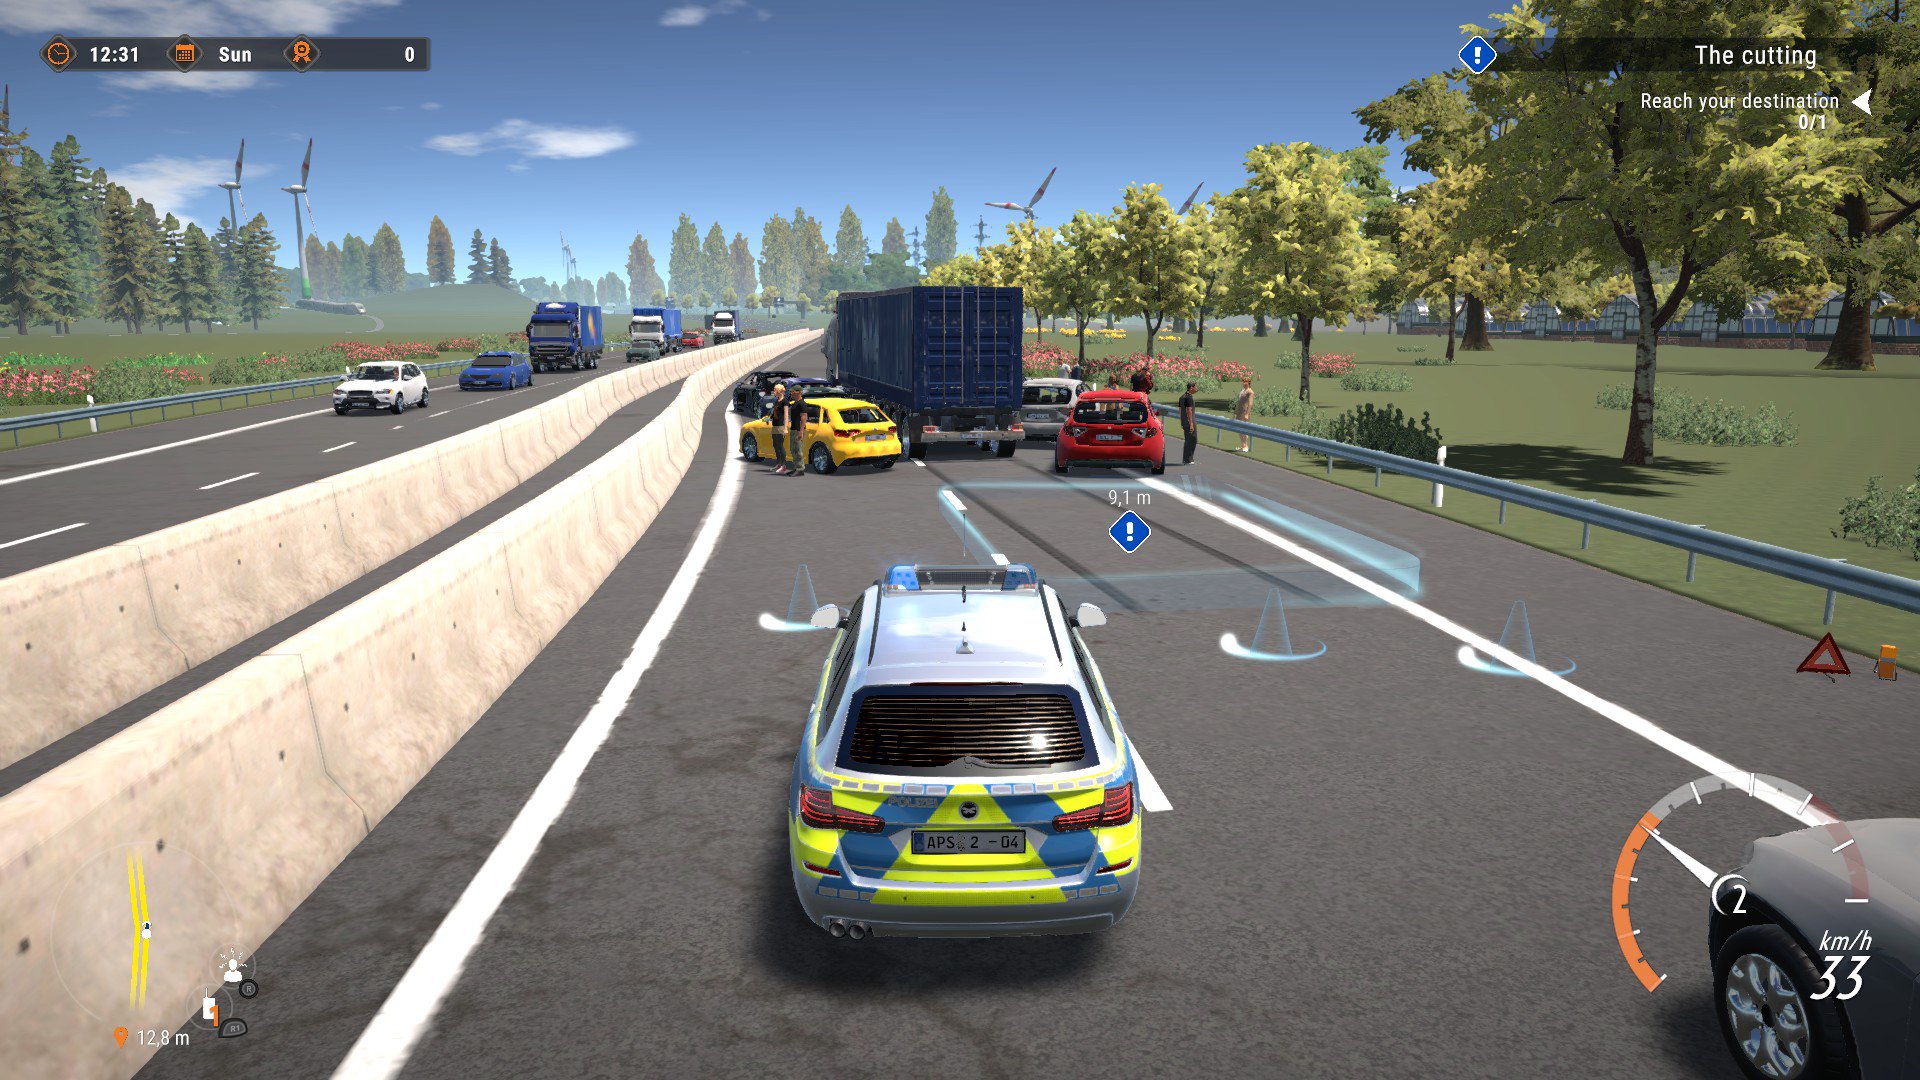 autobahn police simulator 2 steam